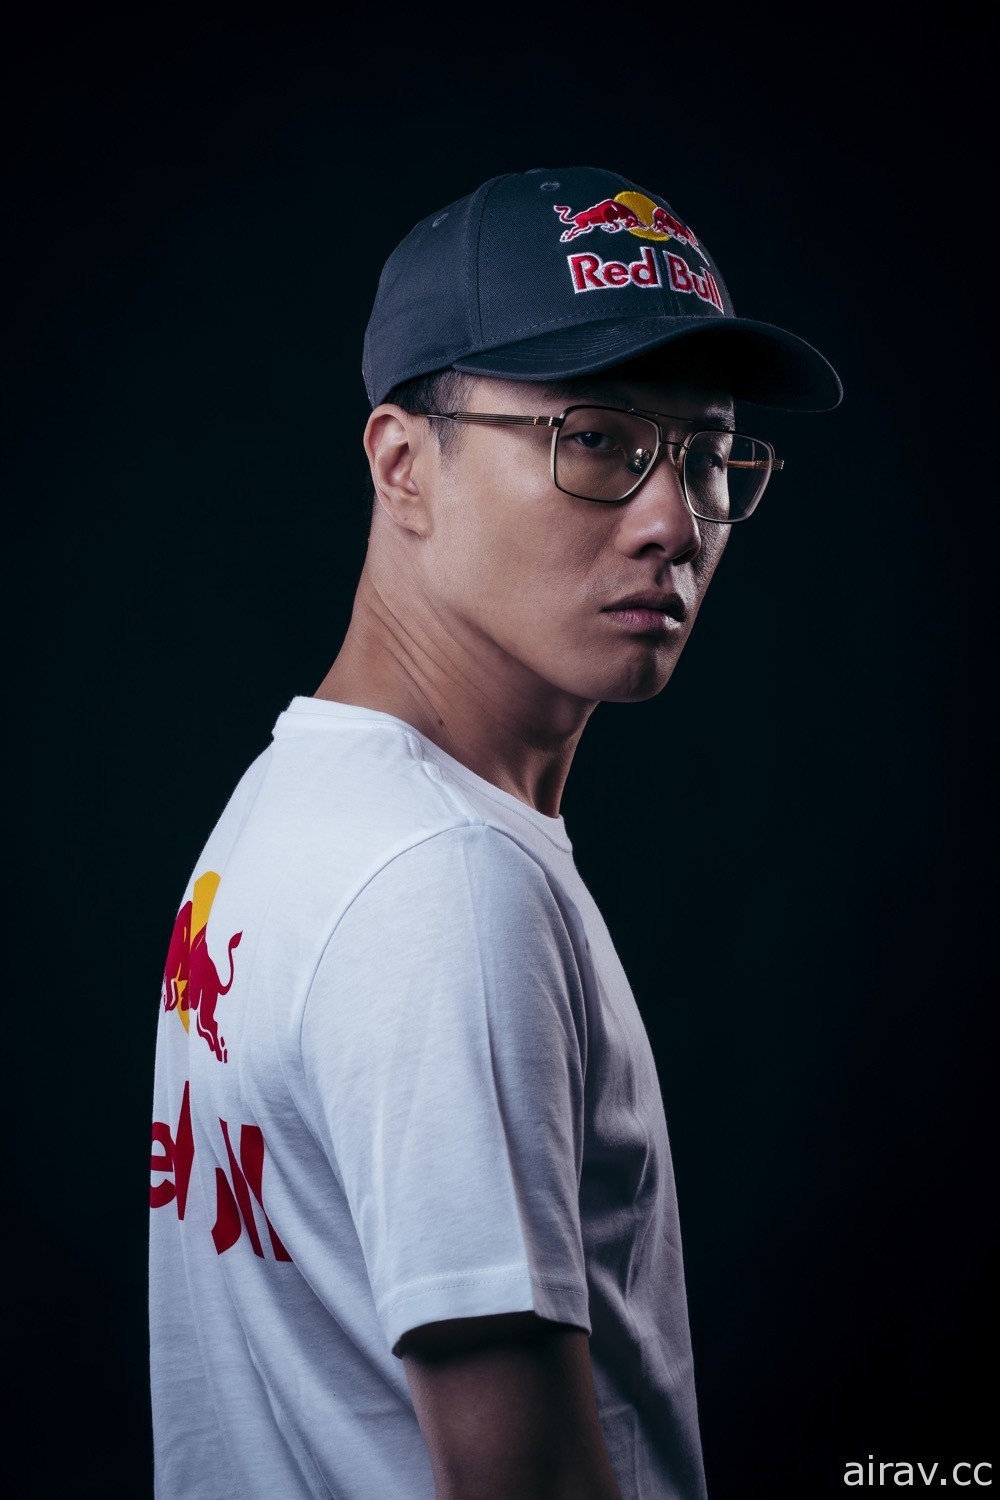 Red Bull Taiwan 簽下首位格鬥電競選手「石油王 Oil King」 5 月將代表台灣出戰倫敦